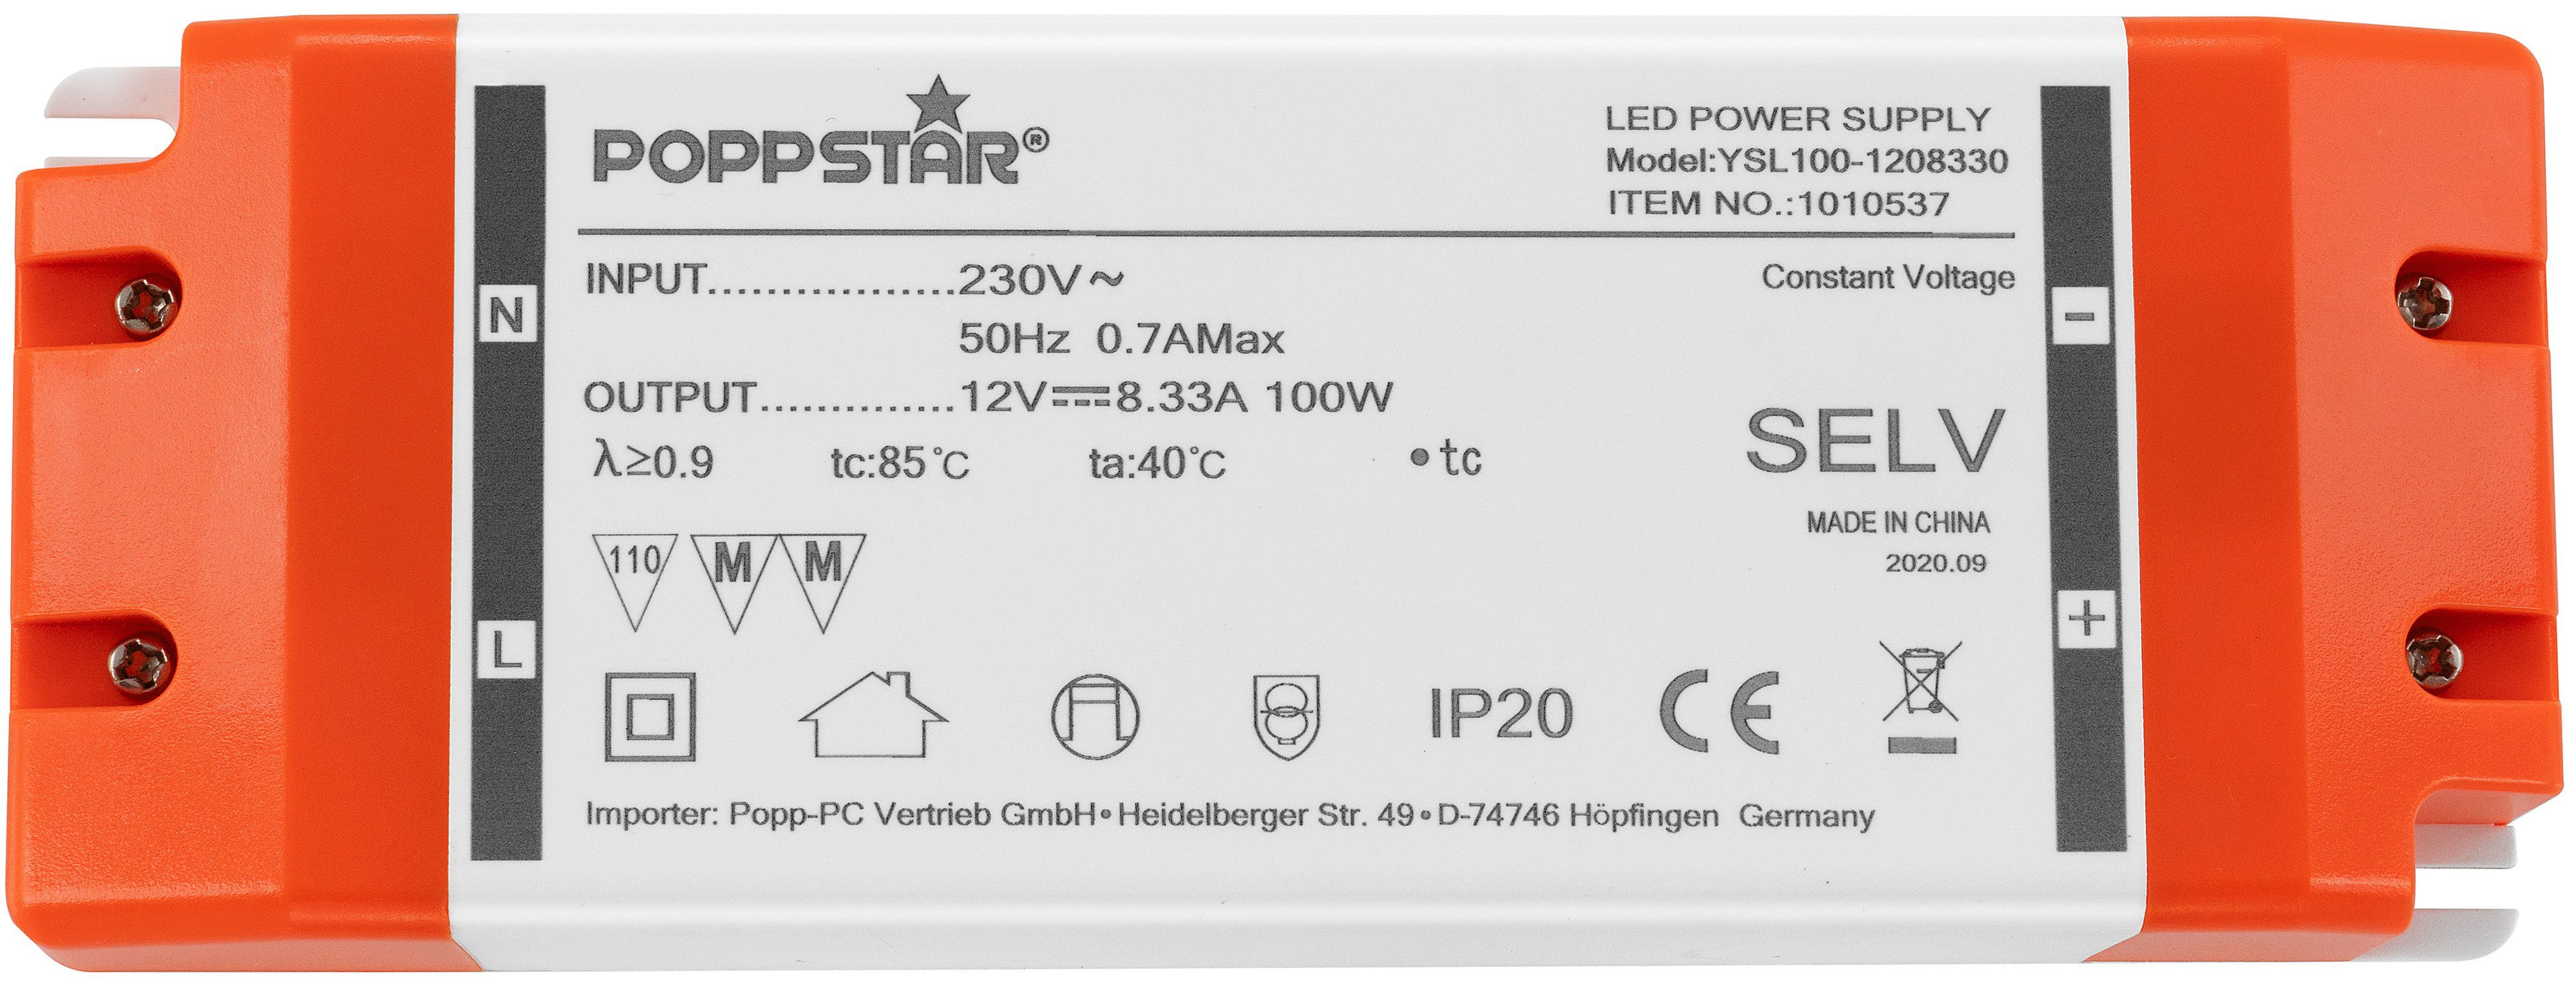 bis 100 8,33A DC 230V für Transformator LED LED LEDs) (12V / Poppstar Watt 12V Trafo AC 1W Trafo